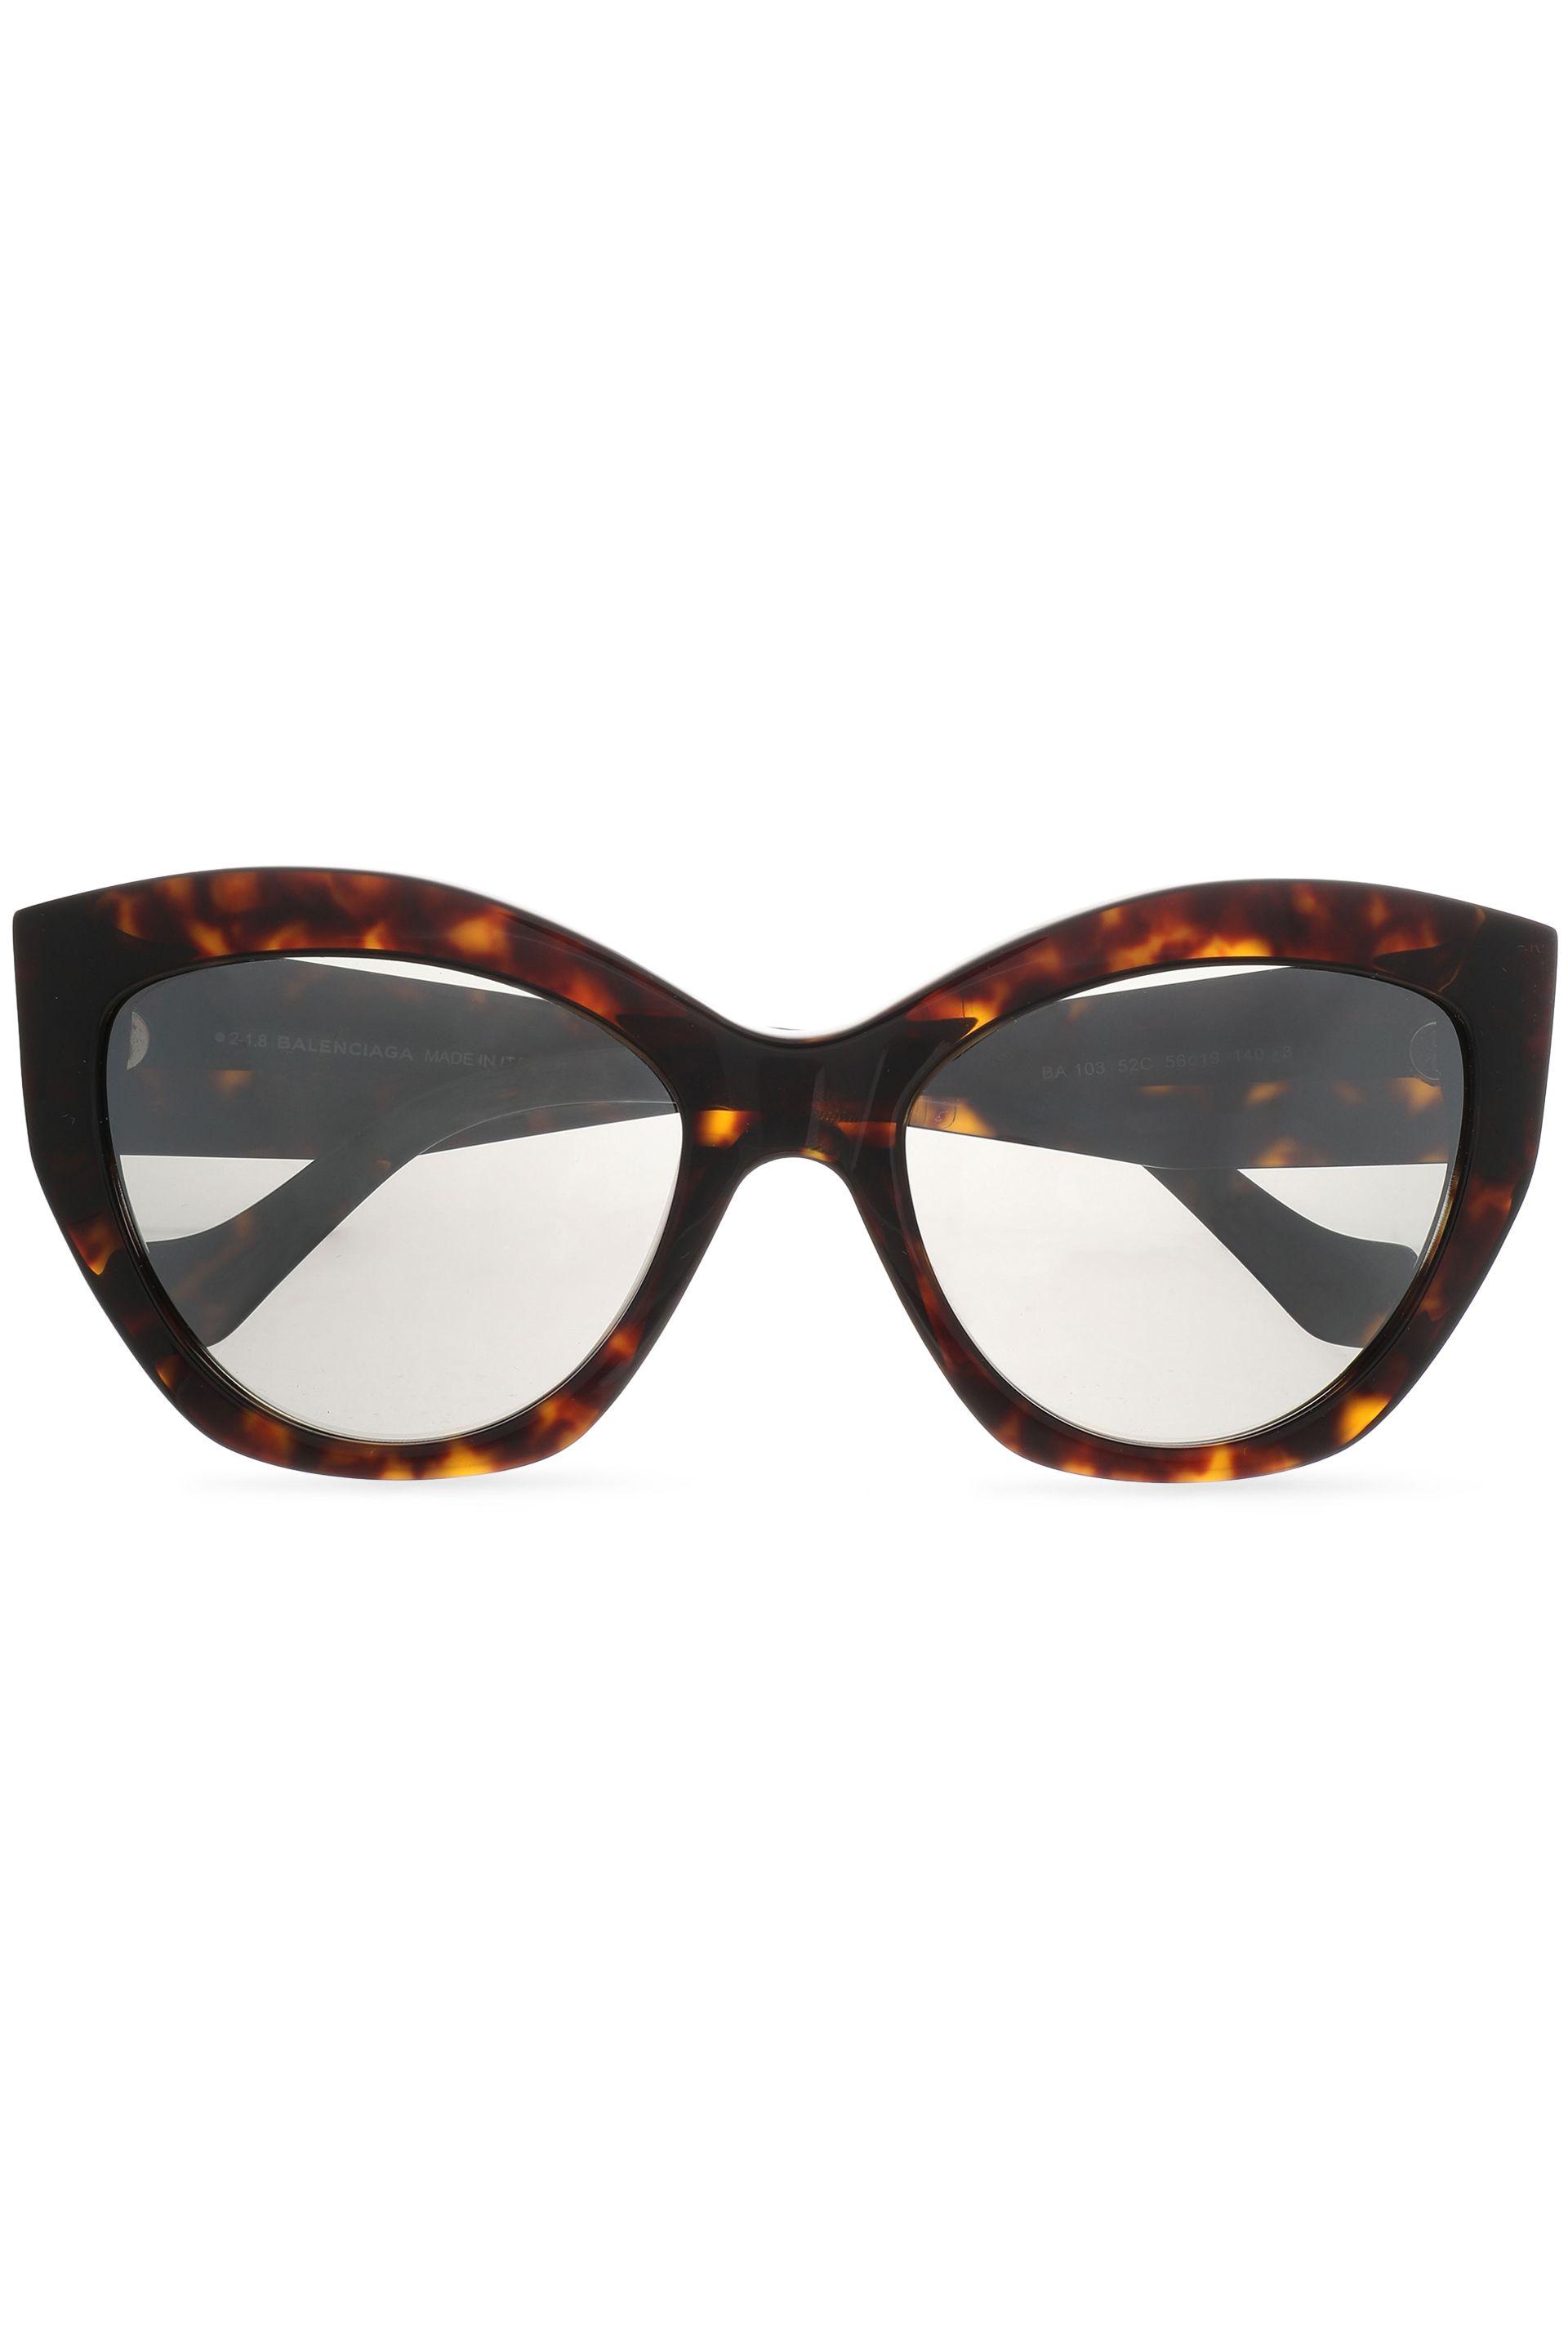 Balenciaga Cat-eye Tortoiseshell Acetate Sunglasses Dark Brown - Lyst